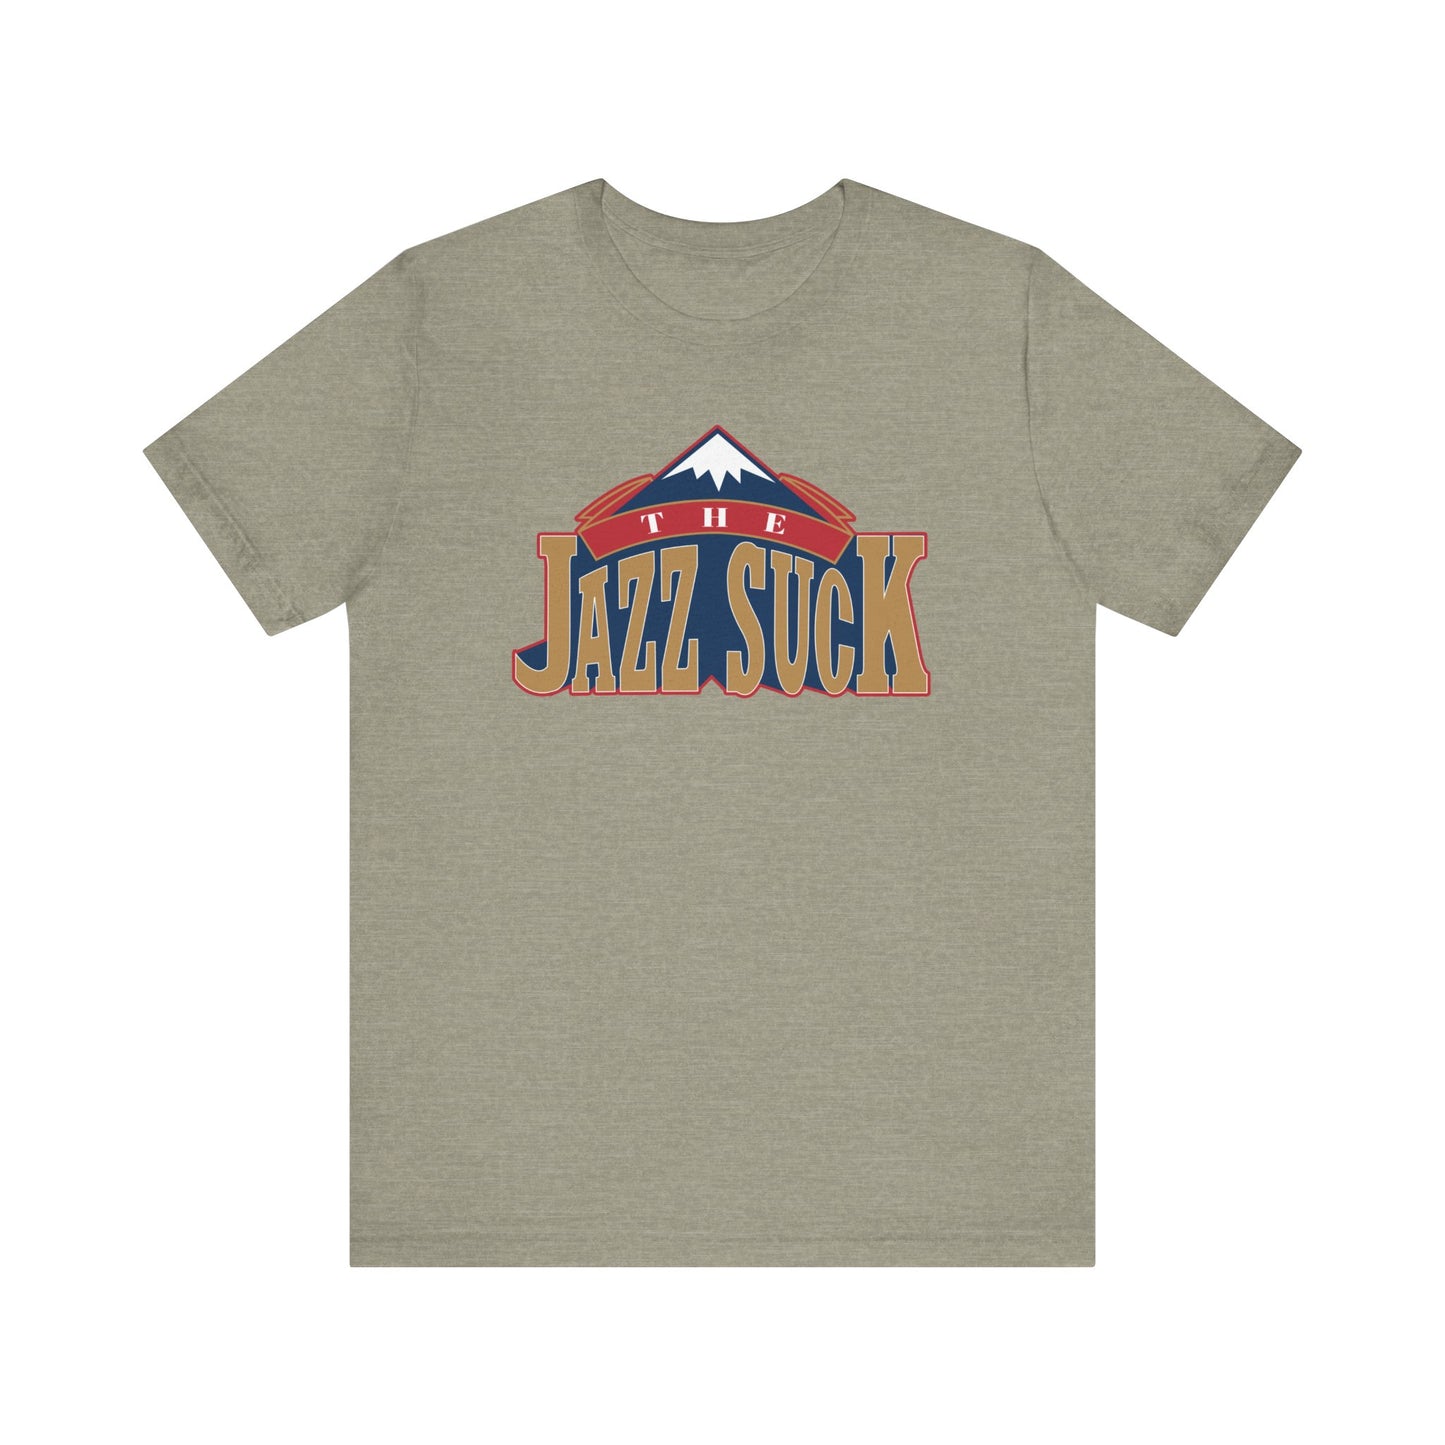 The Jhazz Suck (for Denver fans) - Unisex Jersey Short Sleeve Tee